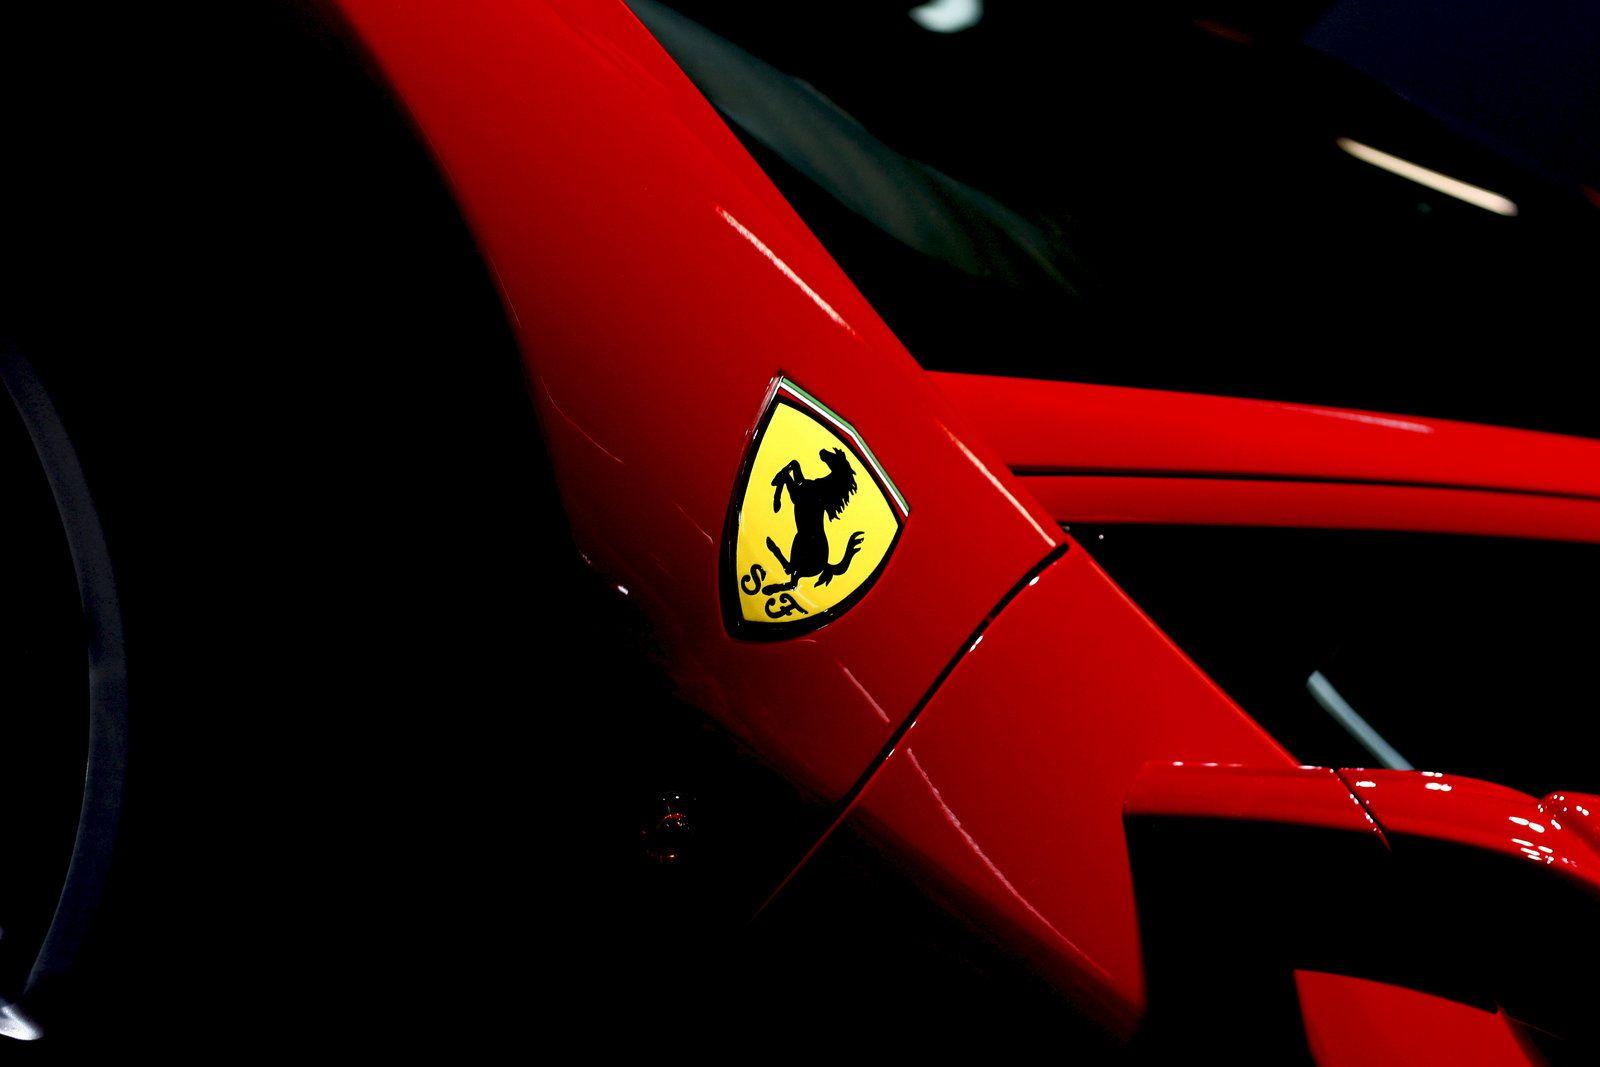 Scuderia Ferrari Wallpaper. (55++ Wallpaper)